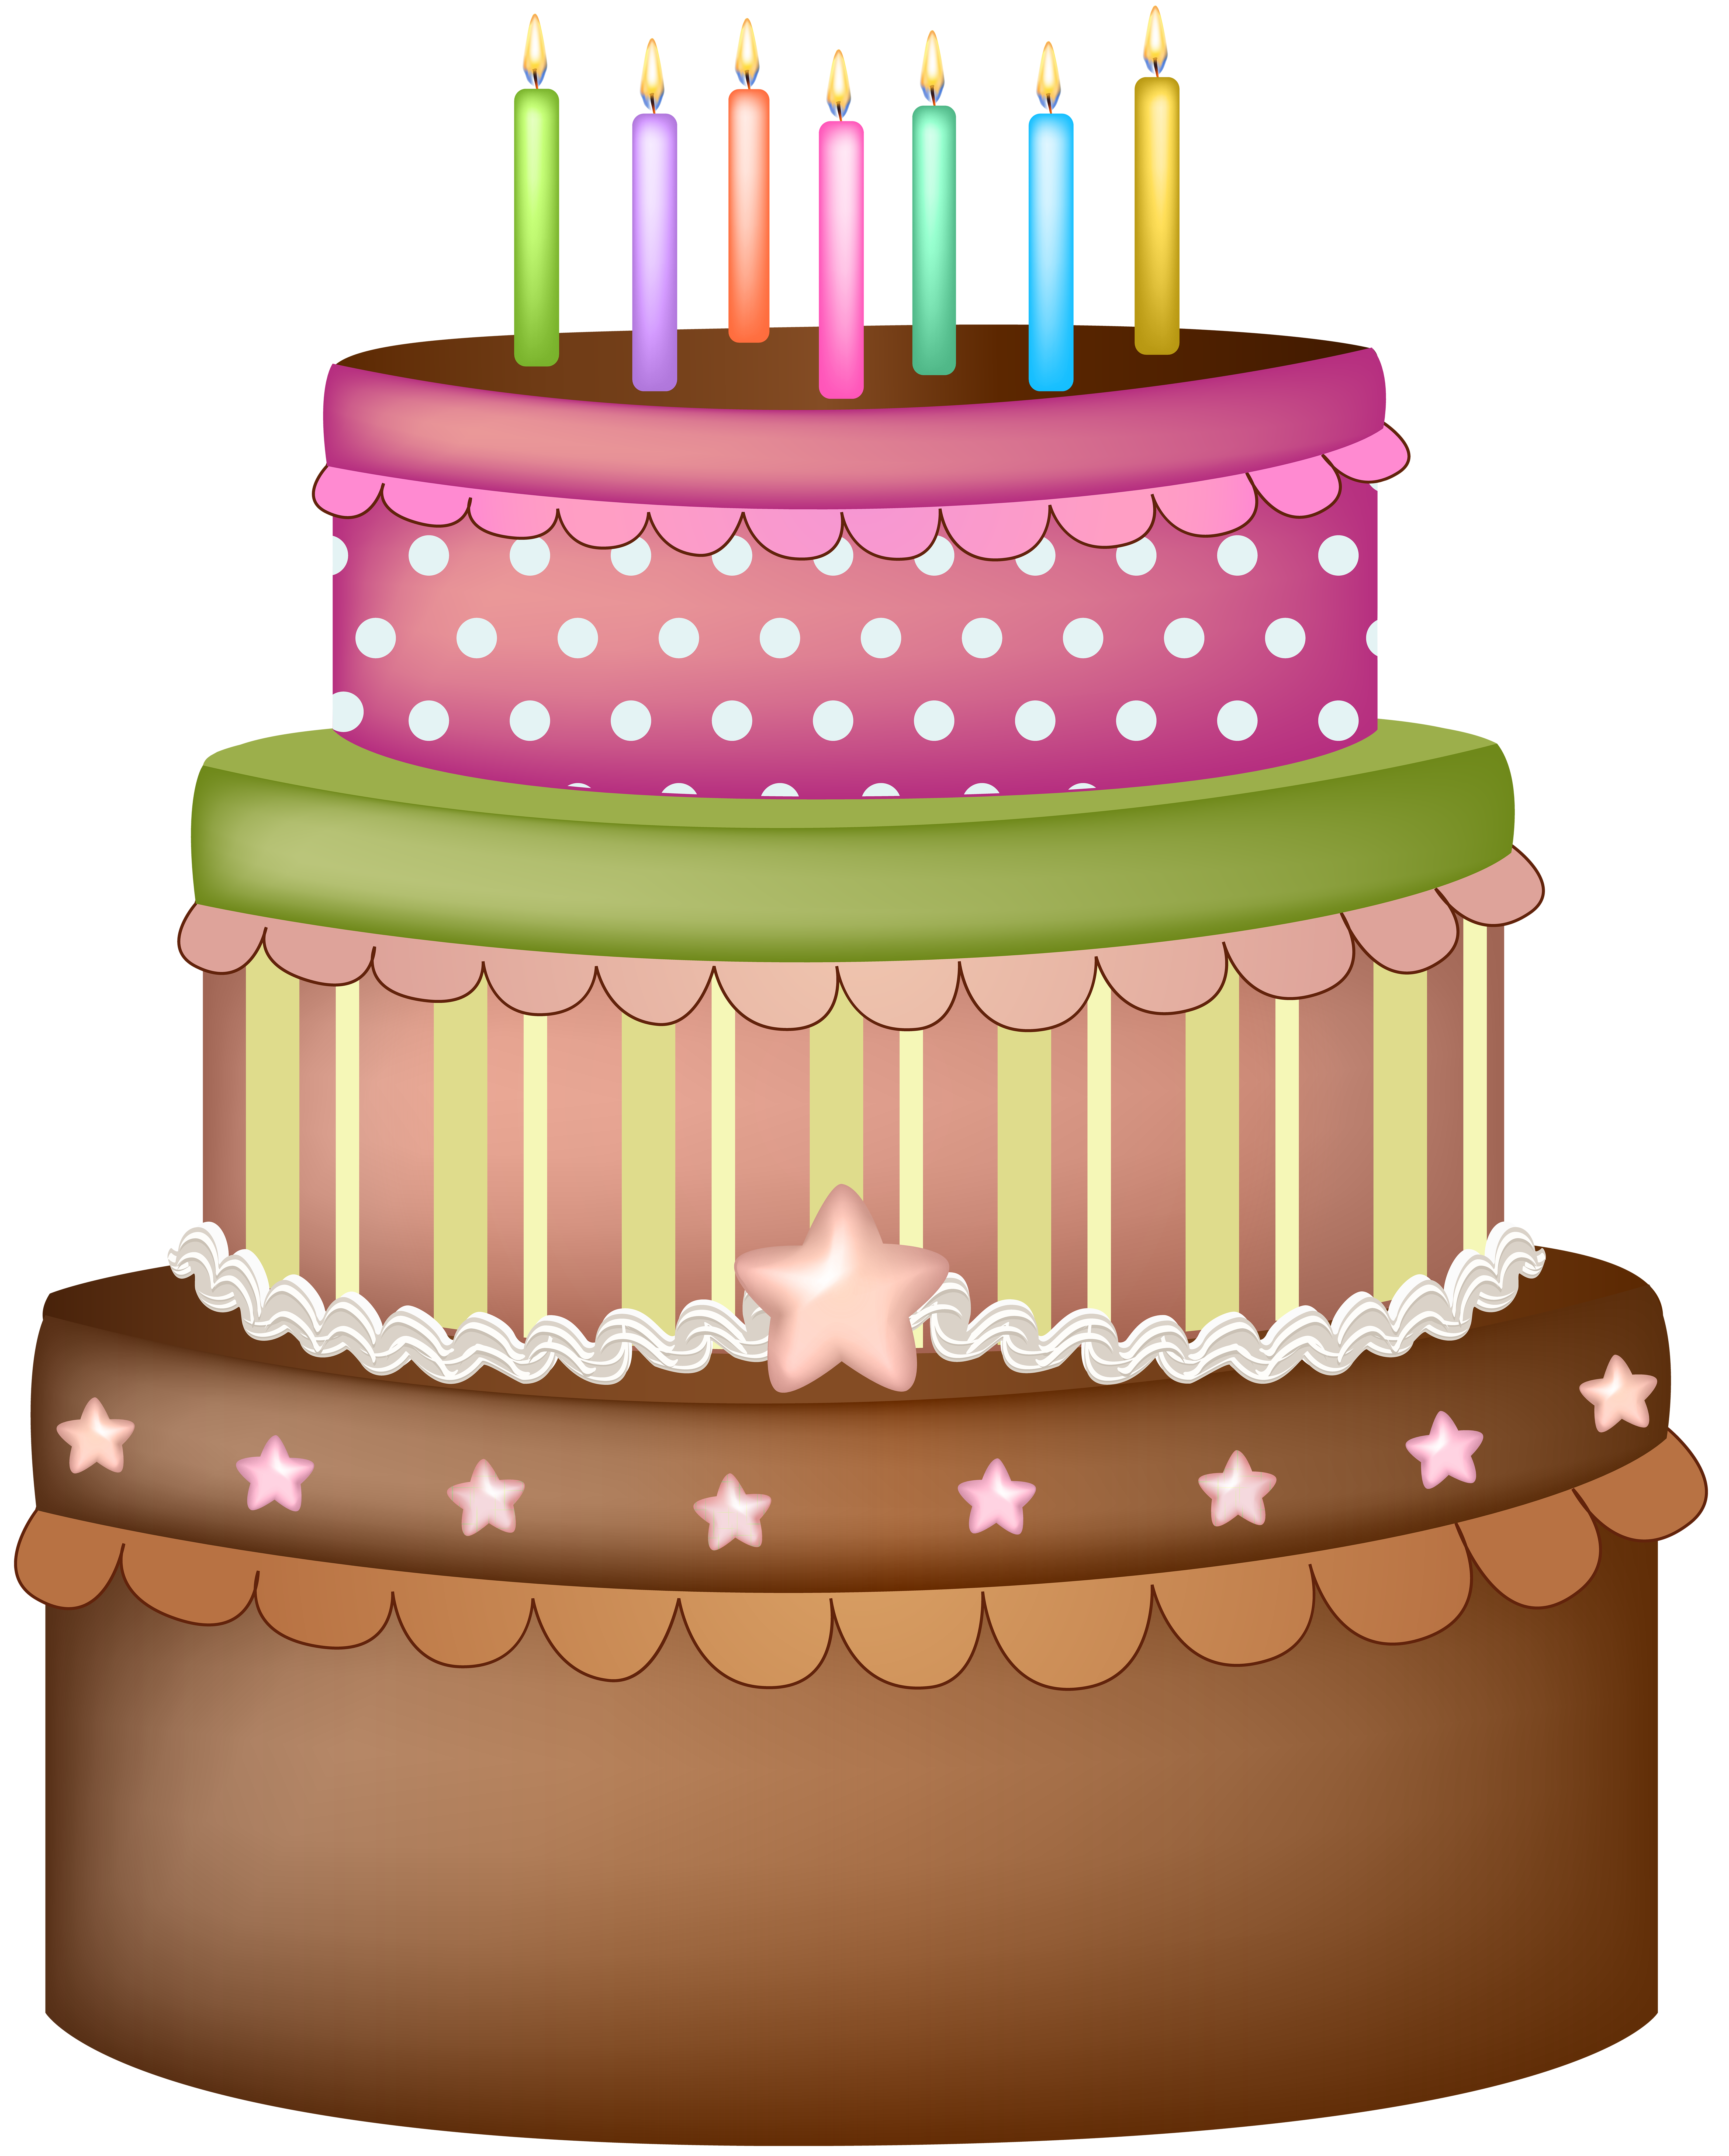 50,500+ Birthday Cake Illustrations, Royalty-Free Vector Graphics & Clip Art  - iStock | Birthday, Birthday cake slice, Birthday cake icon